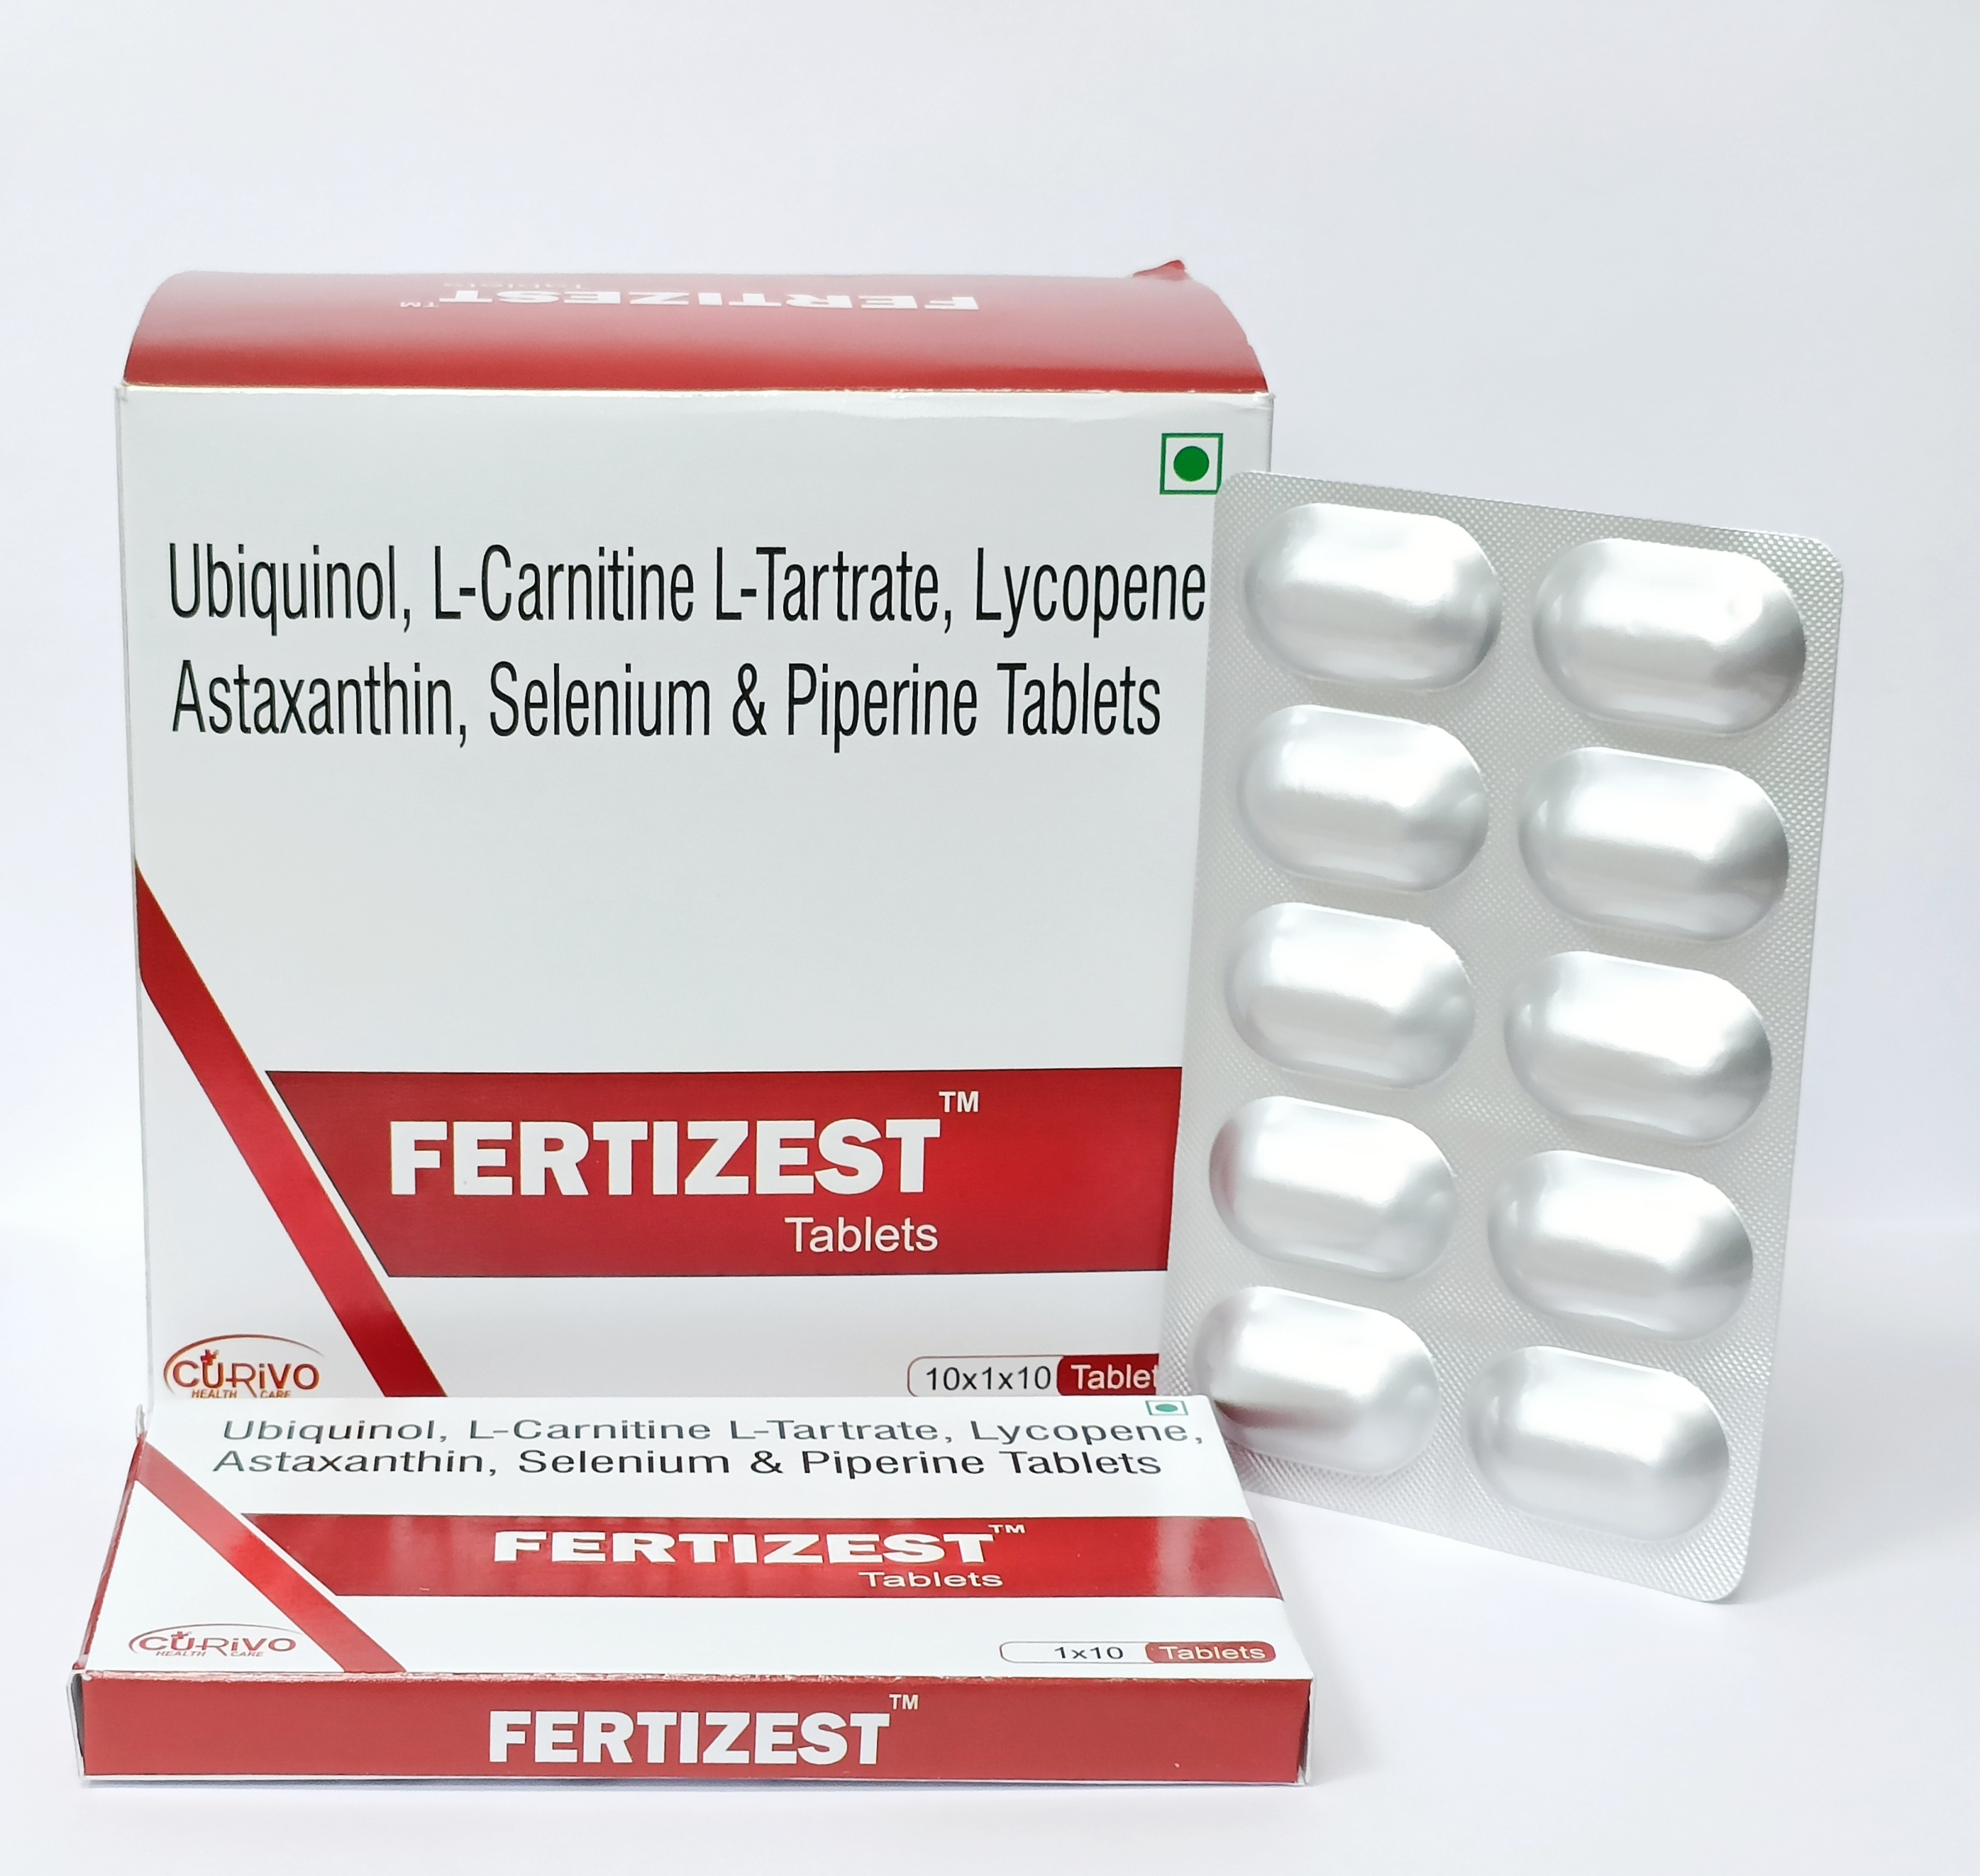 Ubiquinol L-Carnitine L-Tartrate Lycopene and Piperine Tablets